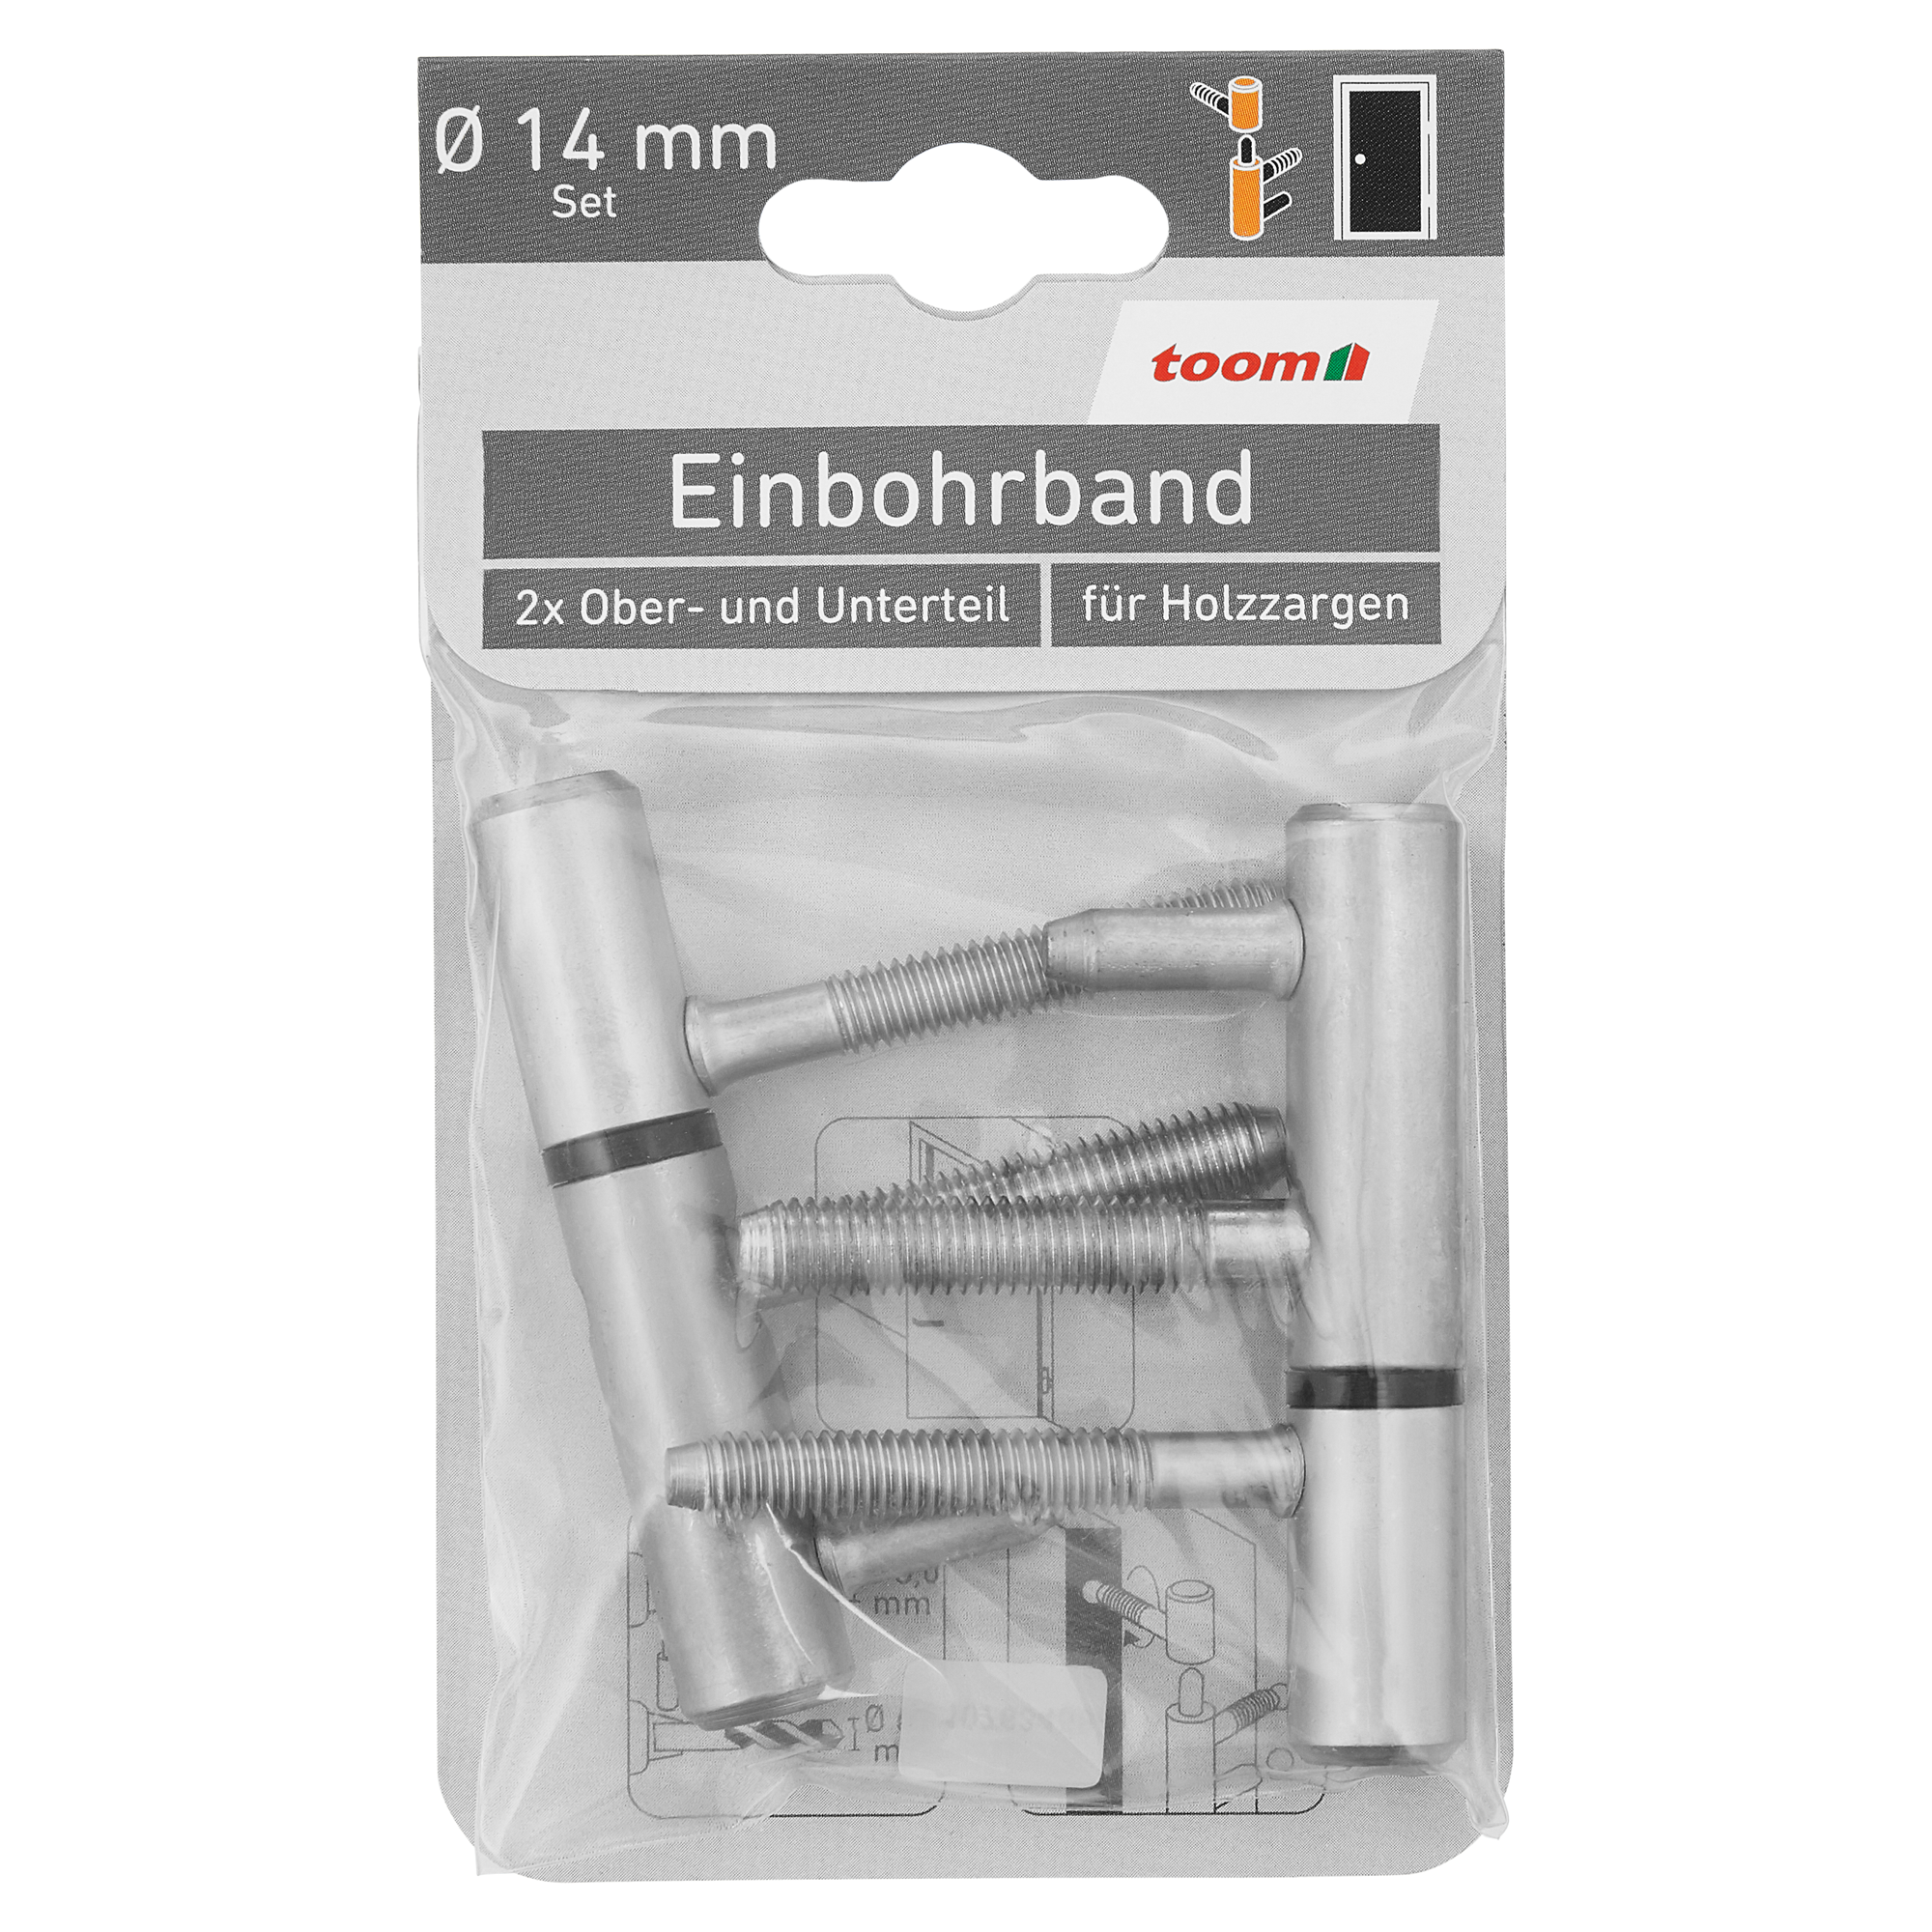 Einbohrband-Set Stahl verchromt Ø 14 mm 4-tlg. + product picture